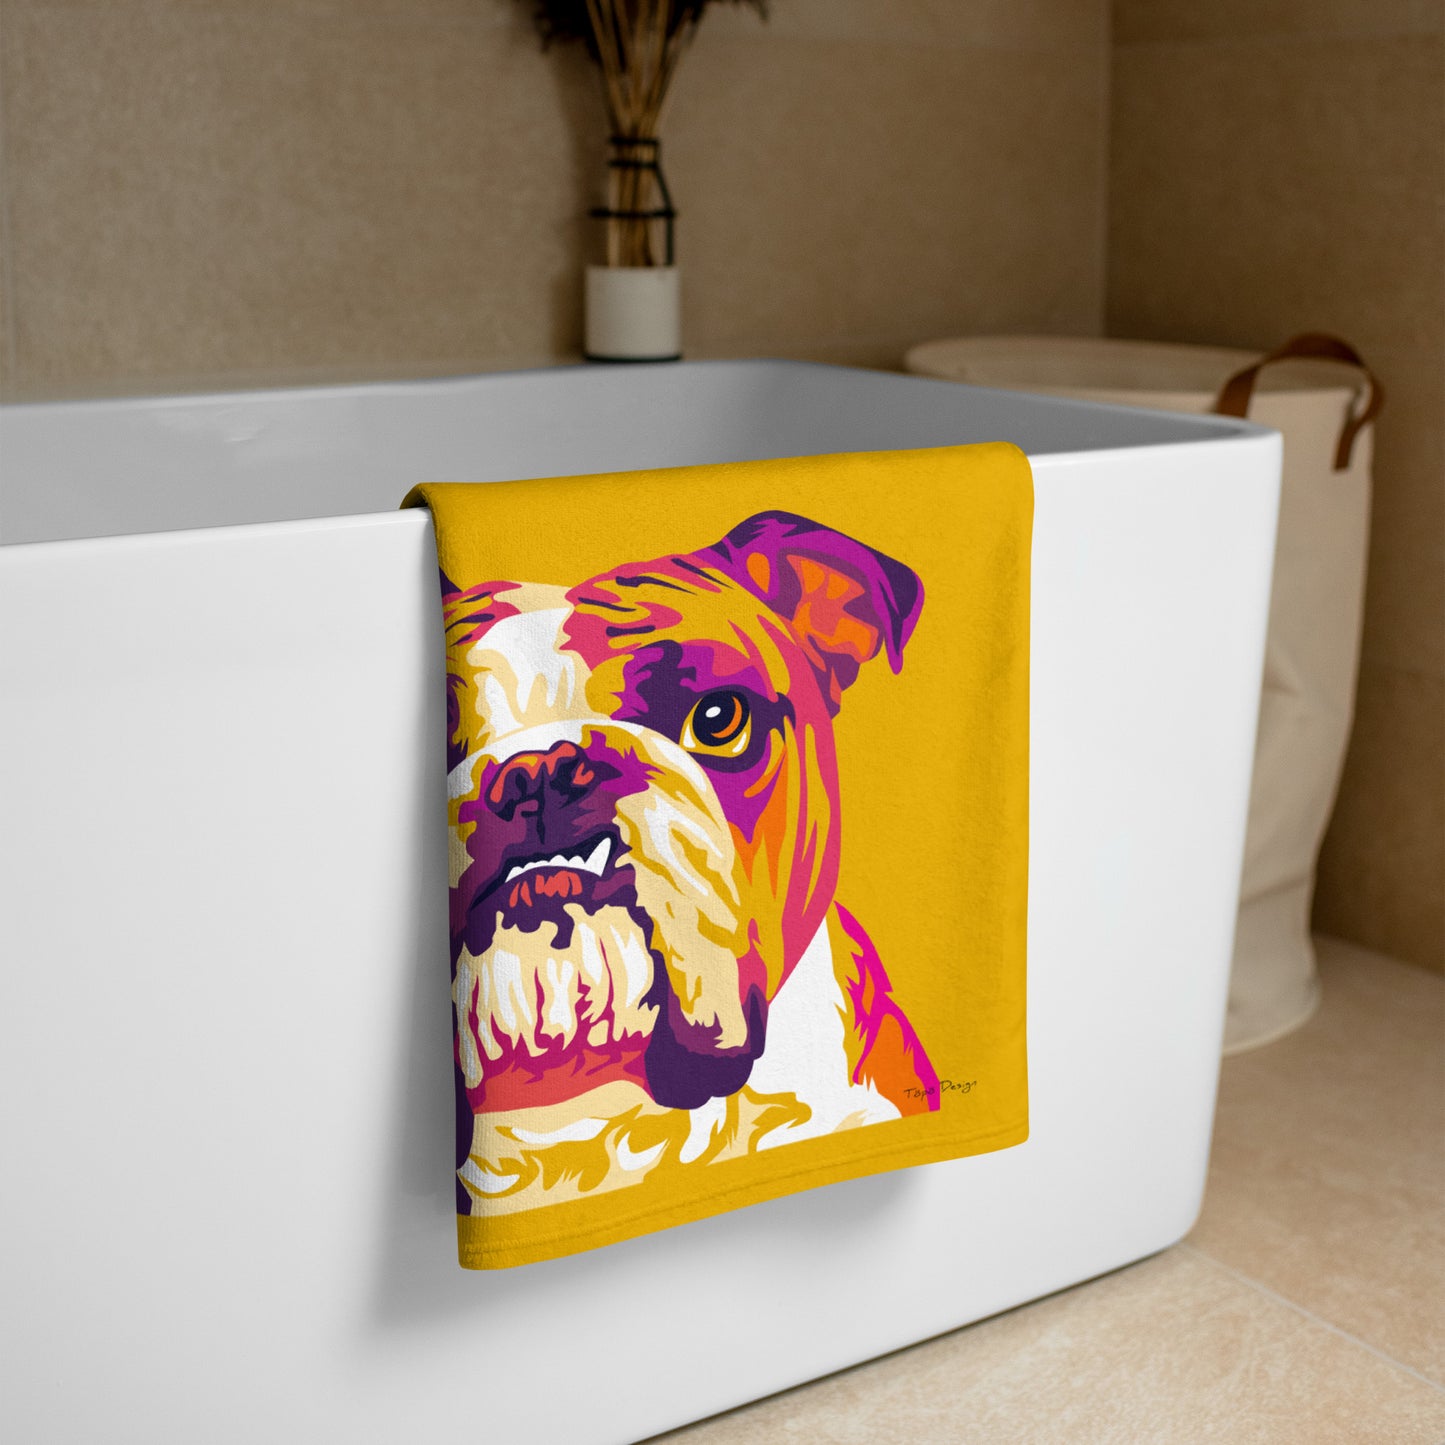 Englanninbulldoggi Kylpypyyhe, Pop Art